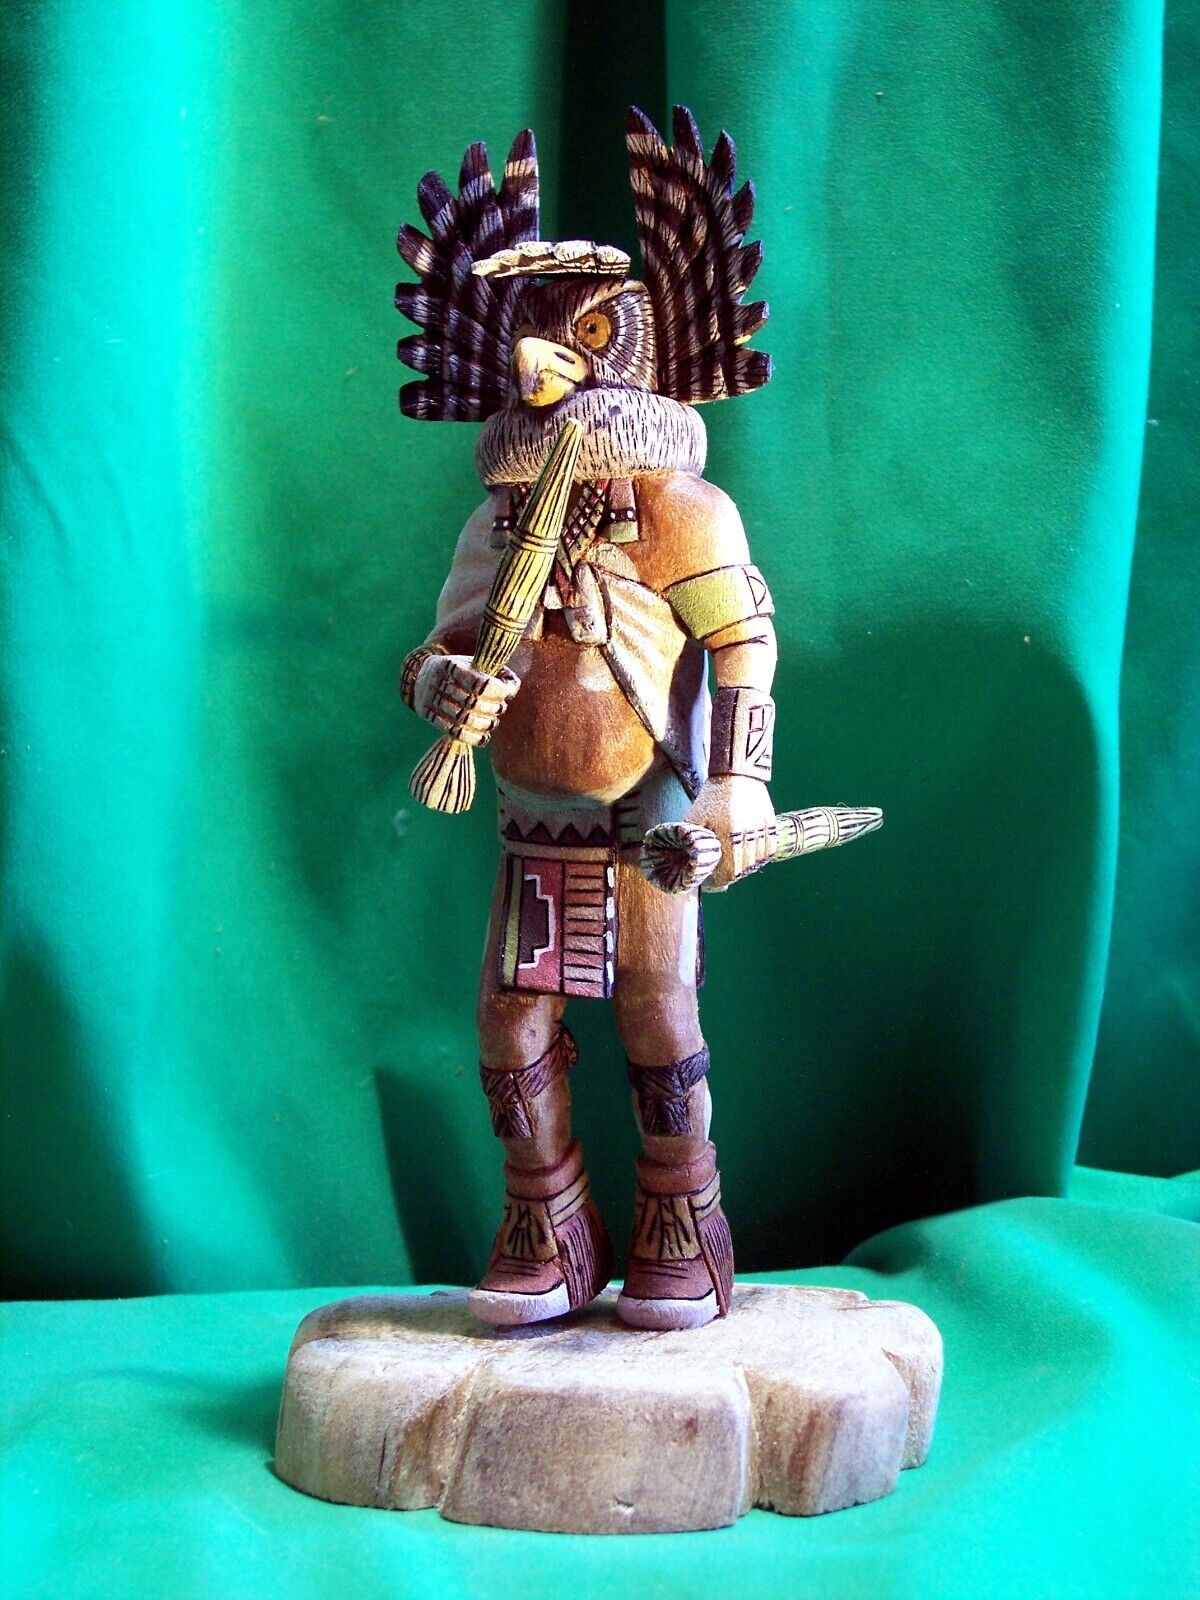 Hopi Kachina Doll - Mongwa, the Owl Kachina by Wally Grover - Fierce